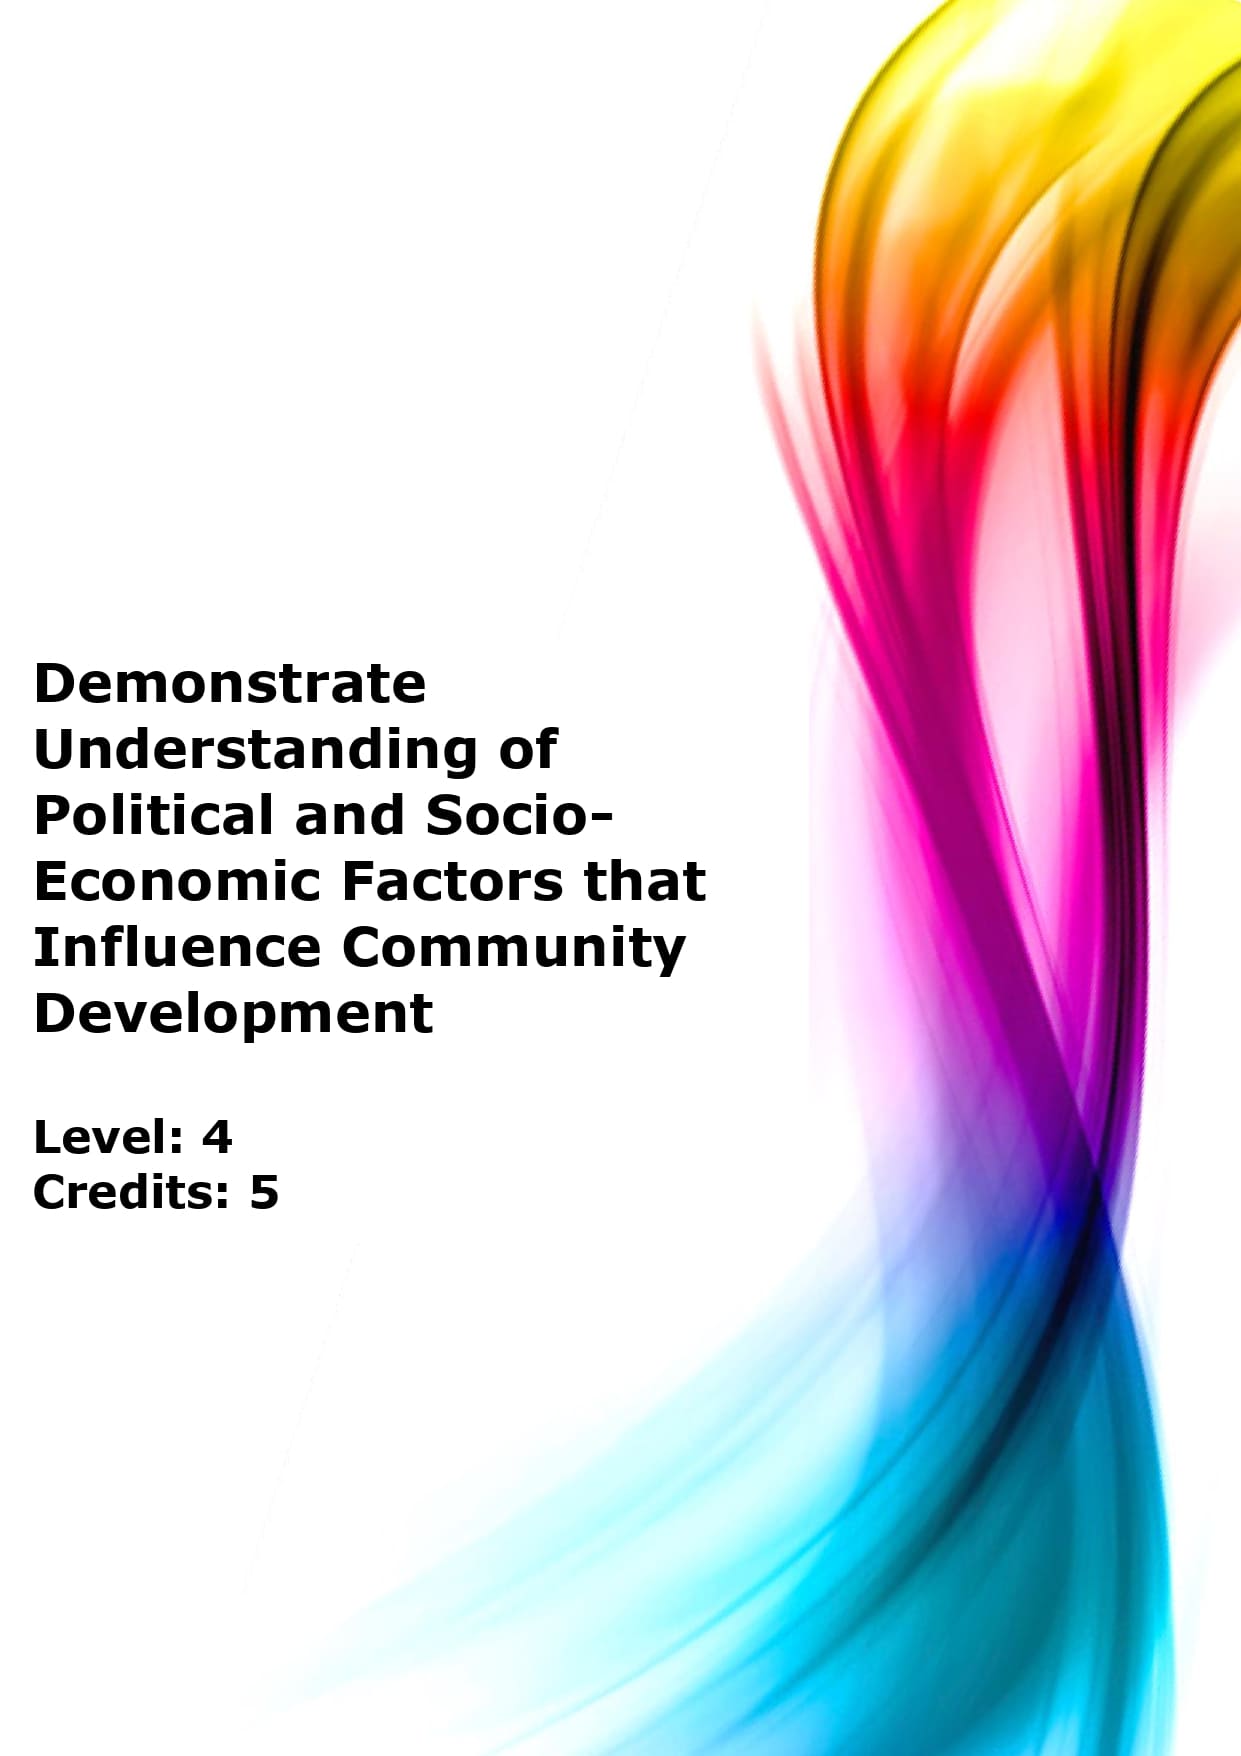 Demonstrate understanding of political and socio-economic factors that influence community development US